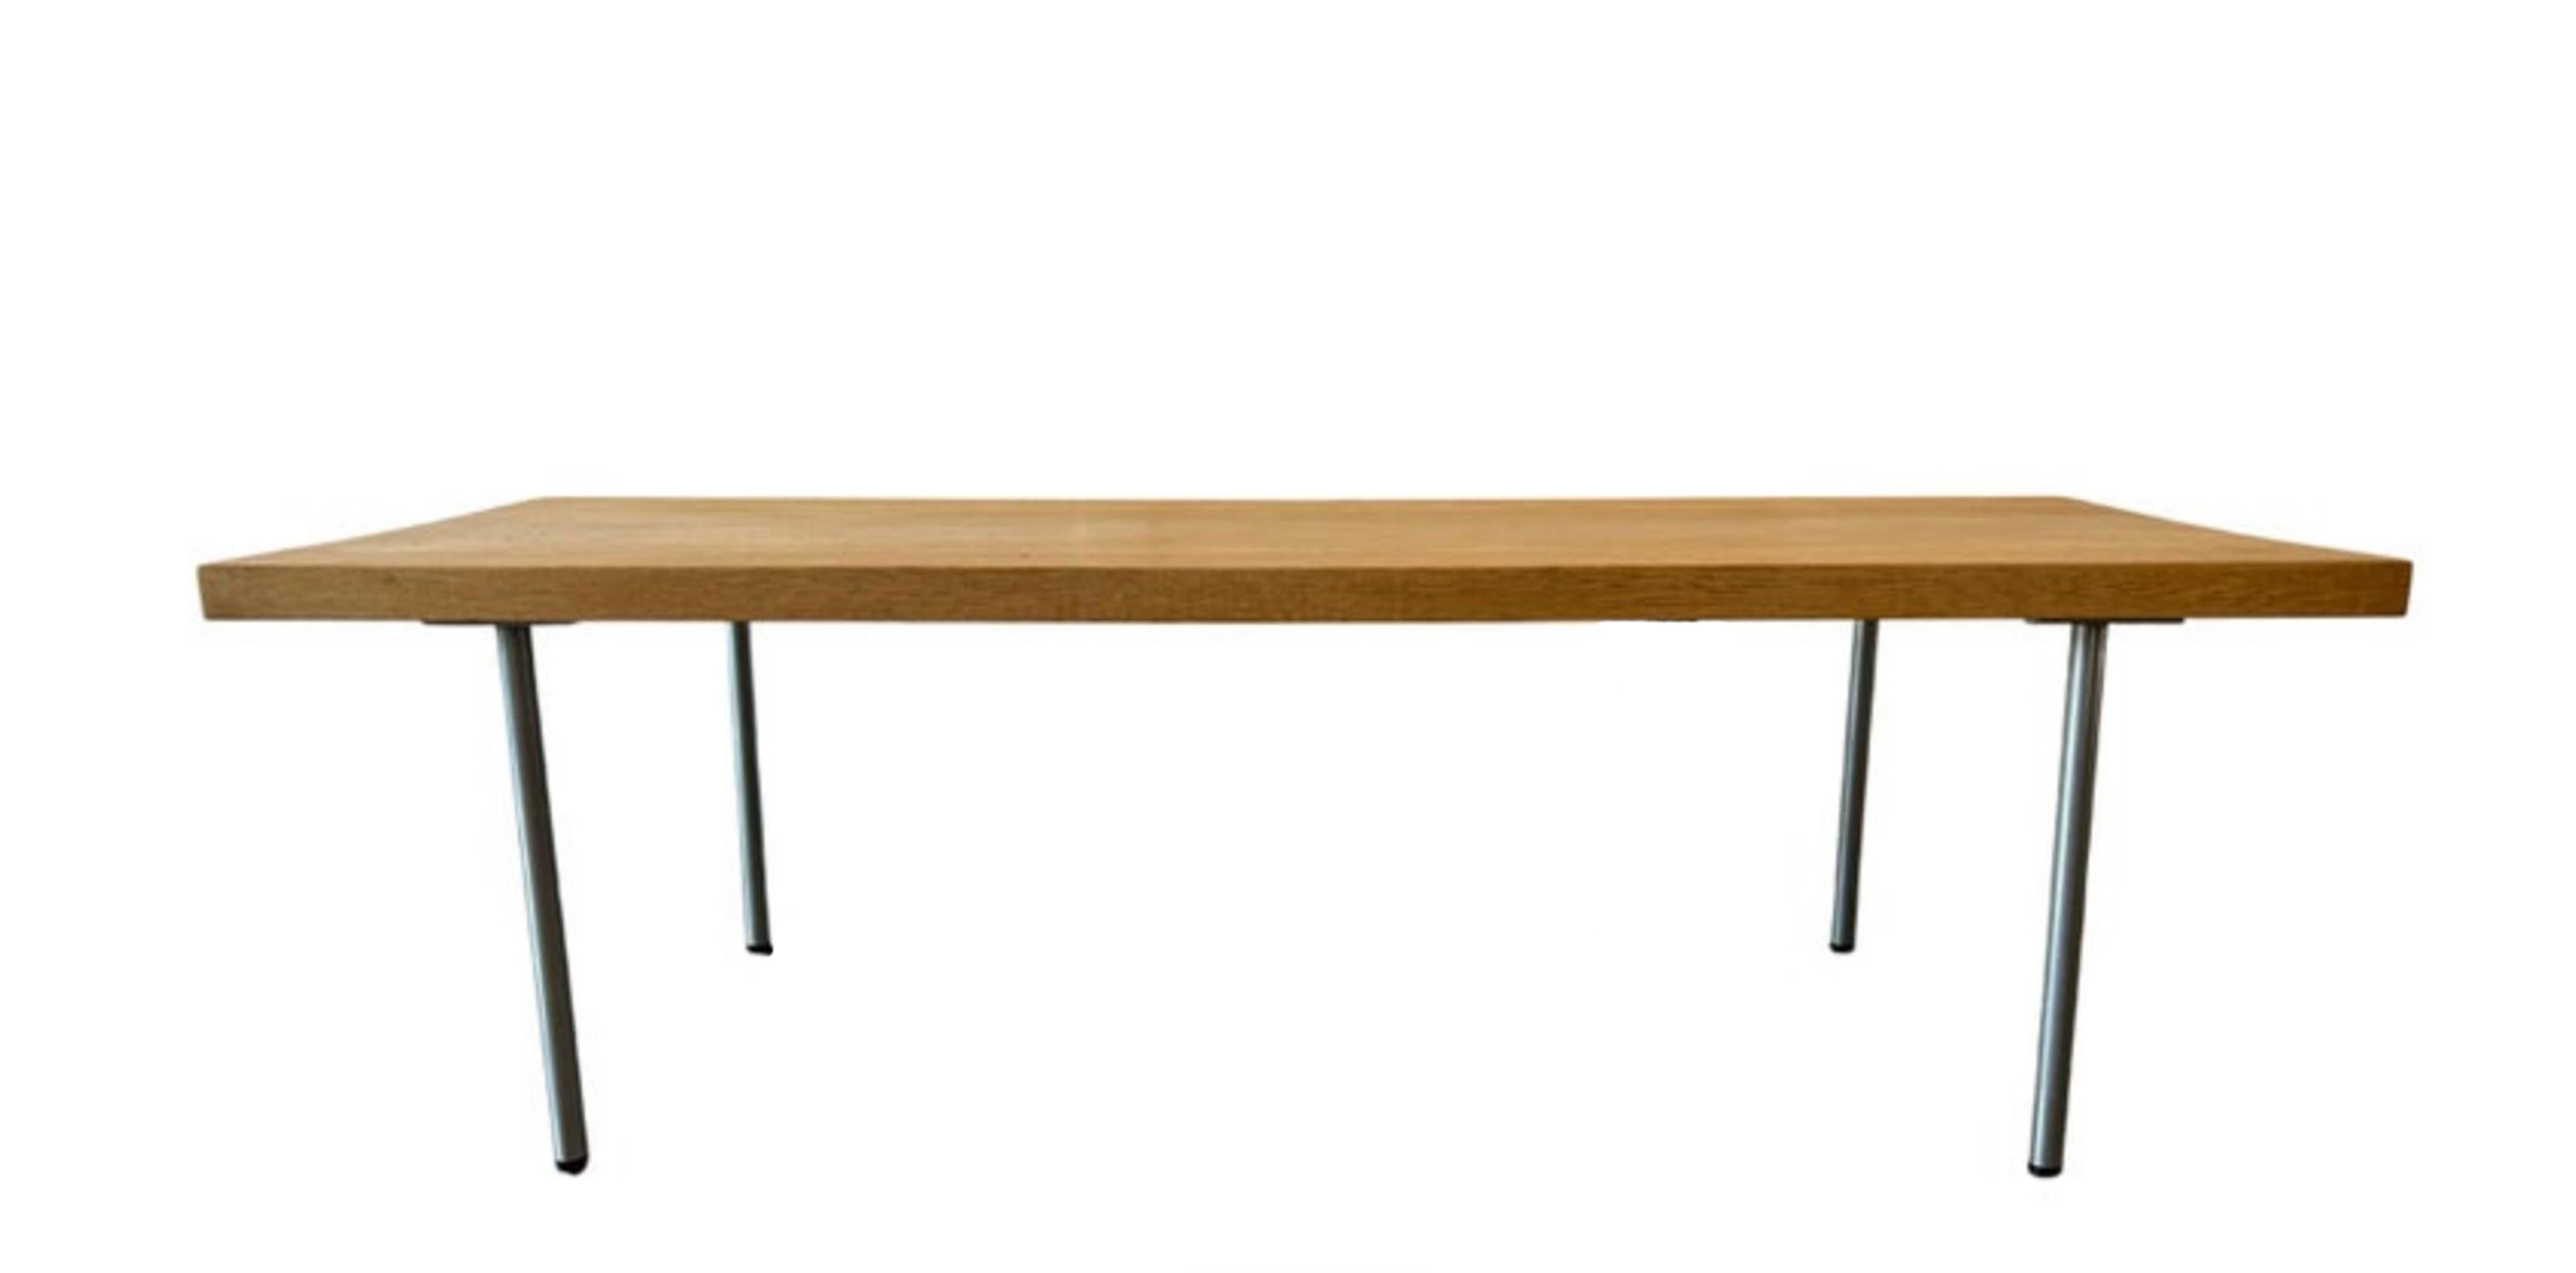 Mid century danish modern solid white oak coffee table metal legs. 1.5